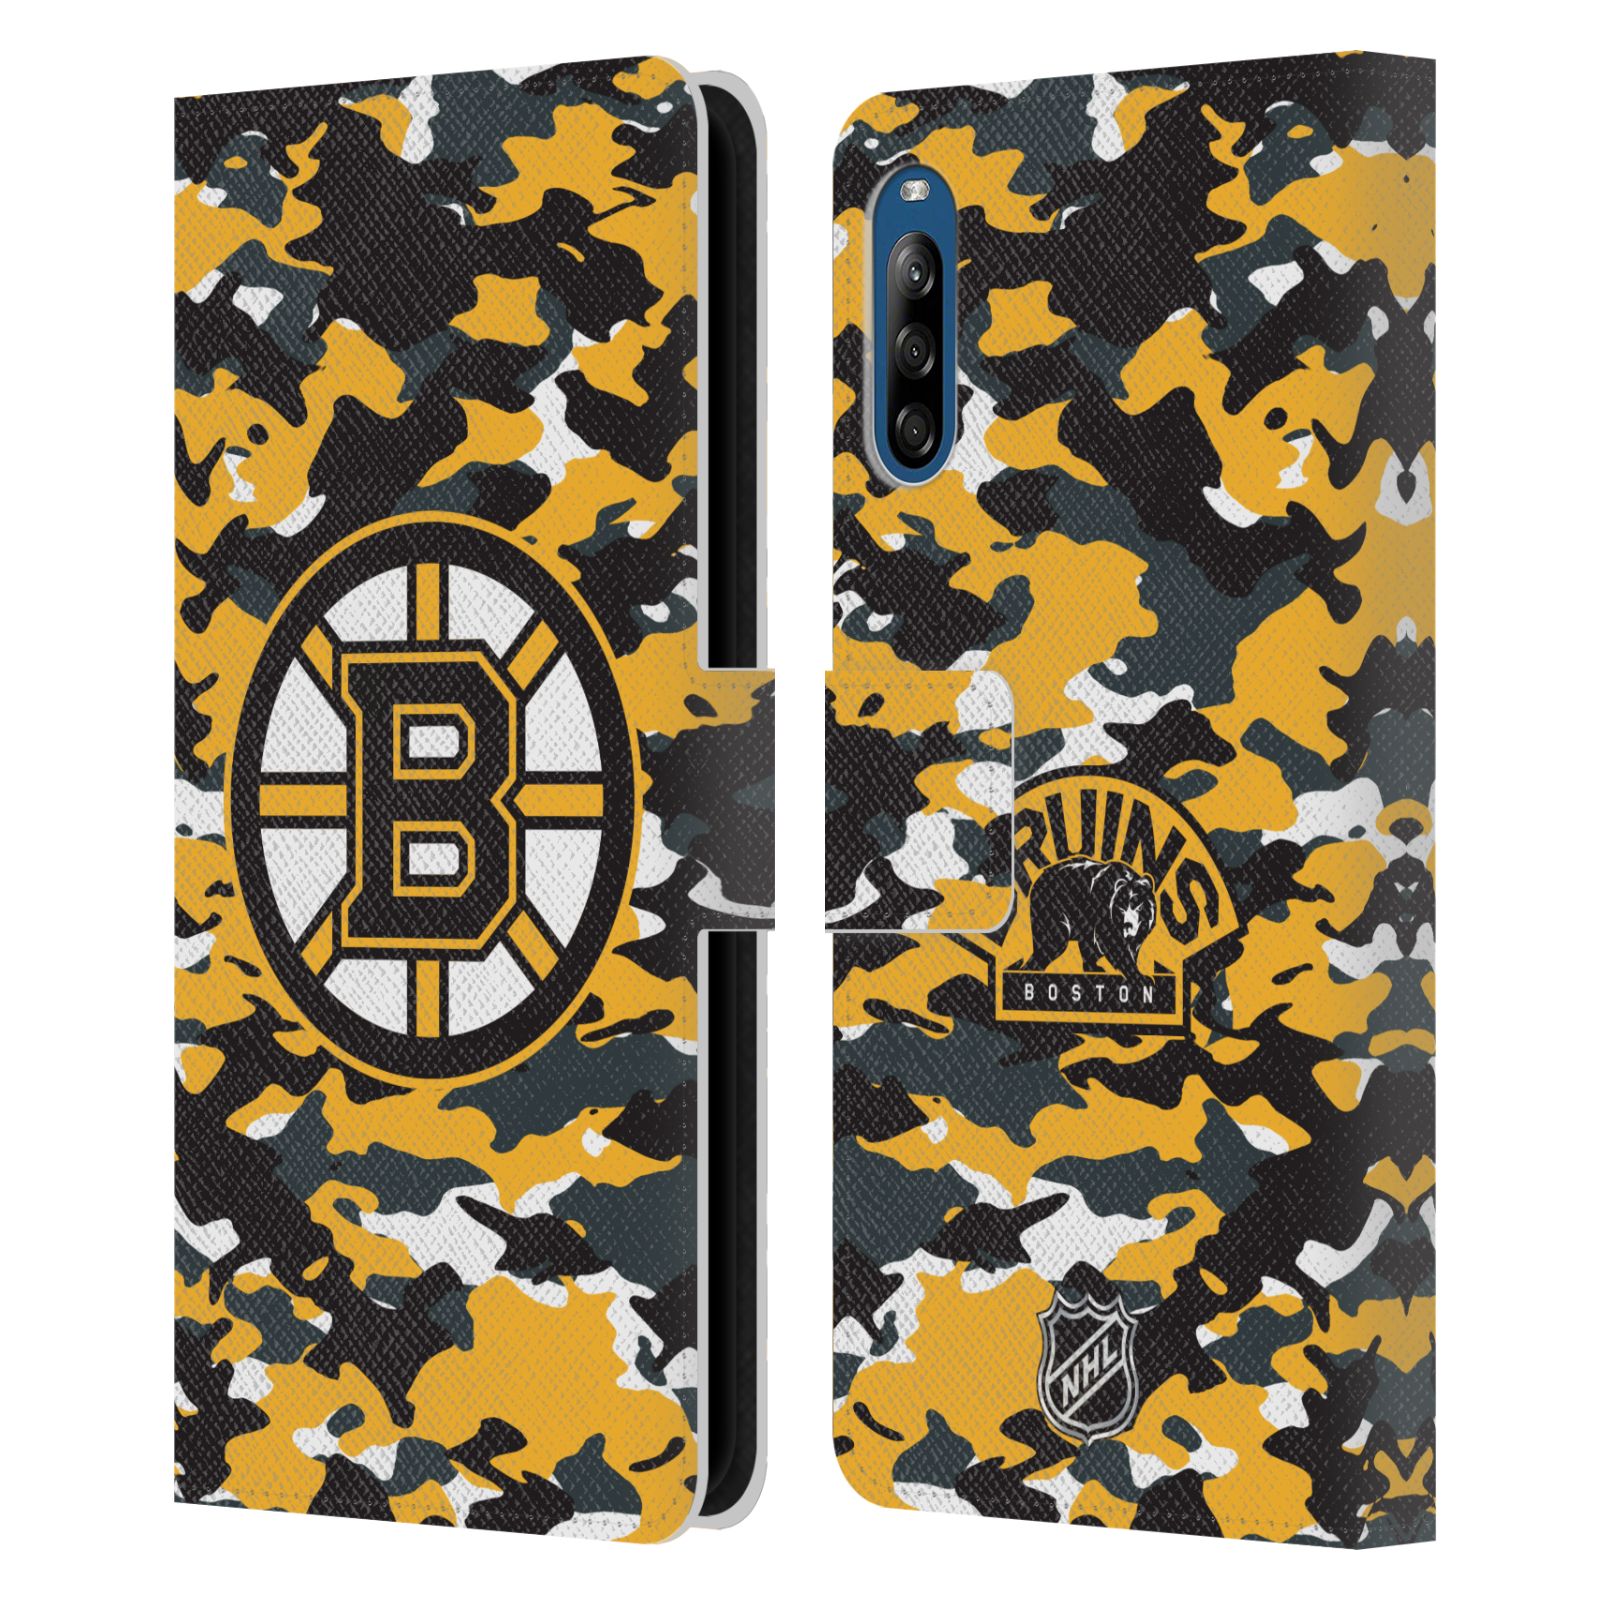 Pouzdro pro mobil Sony Xperia L4 - HEAD CASE - NHL - Boston Bruins - kamufláž